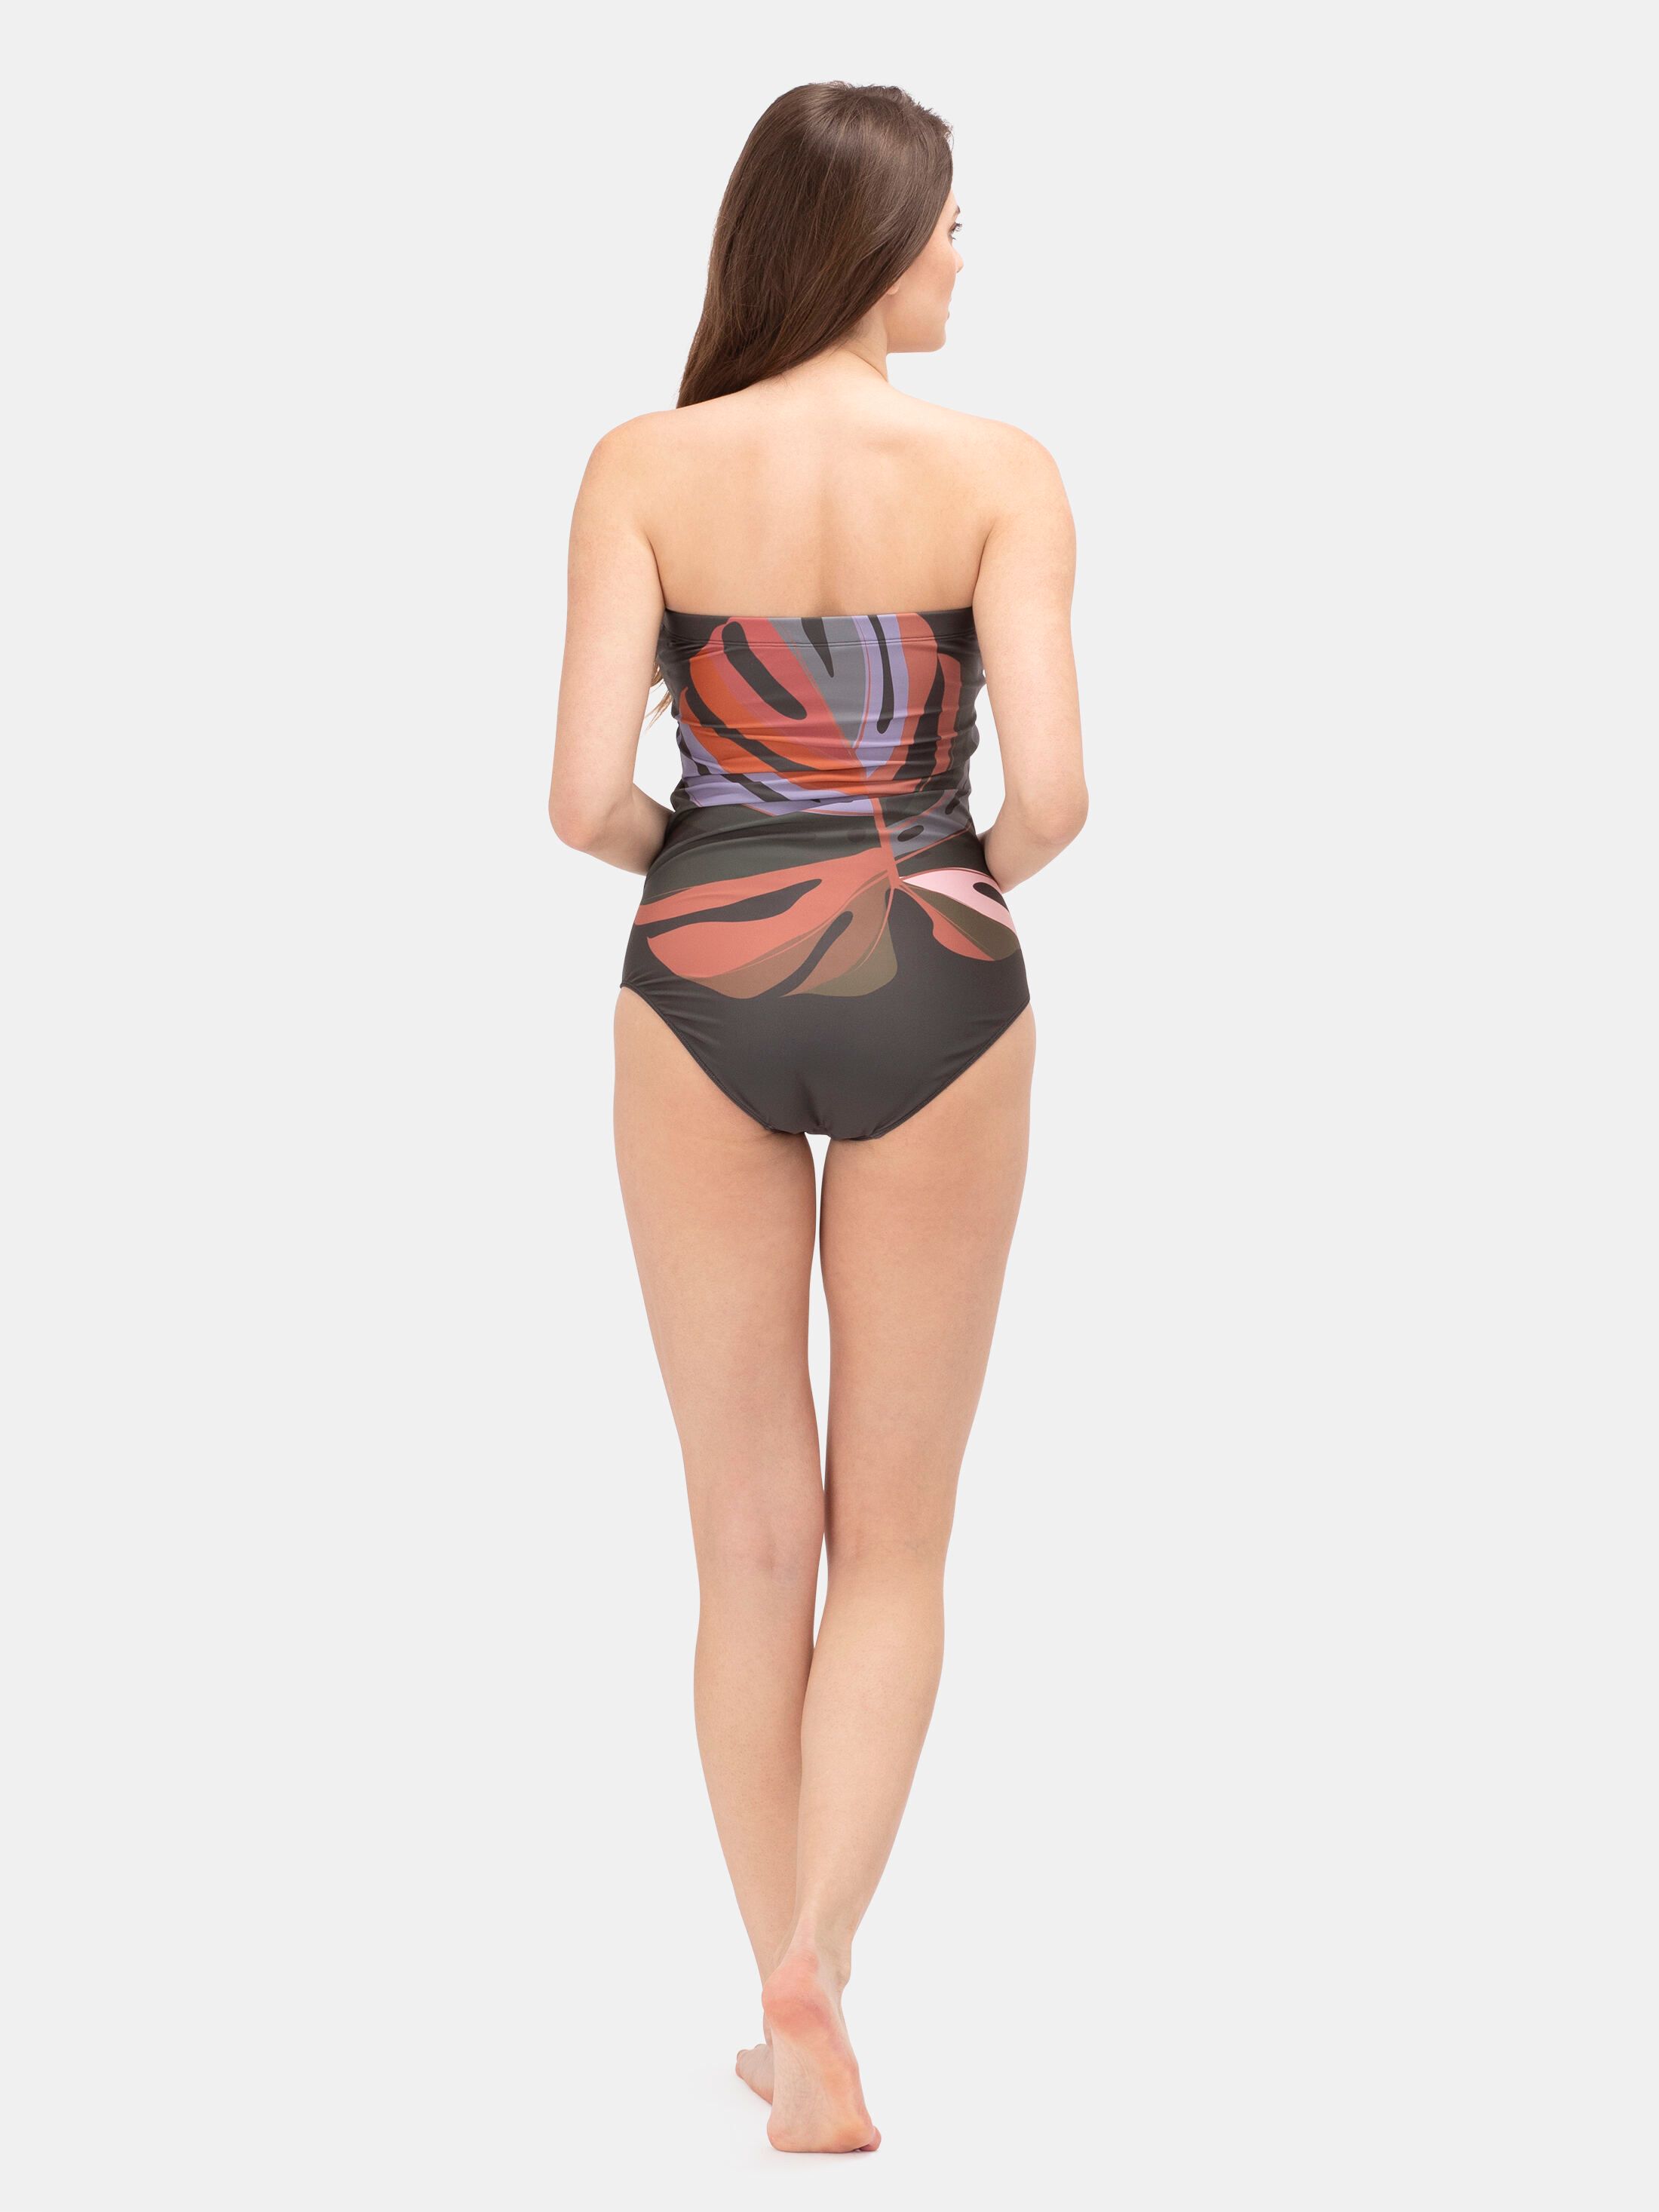 design your own bathing suit